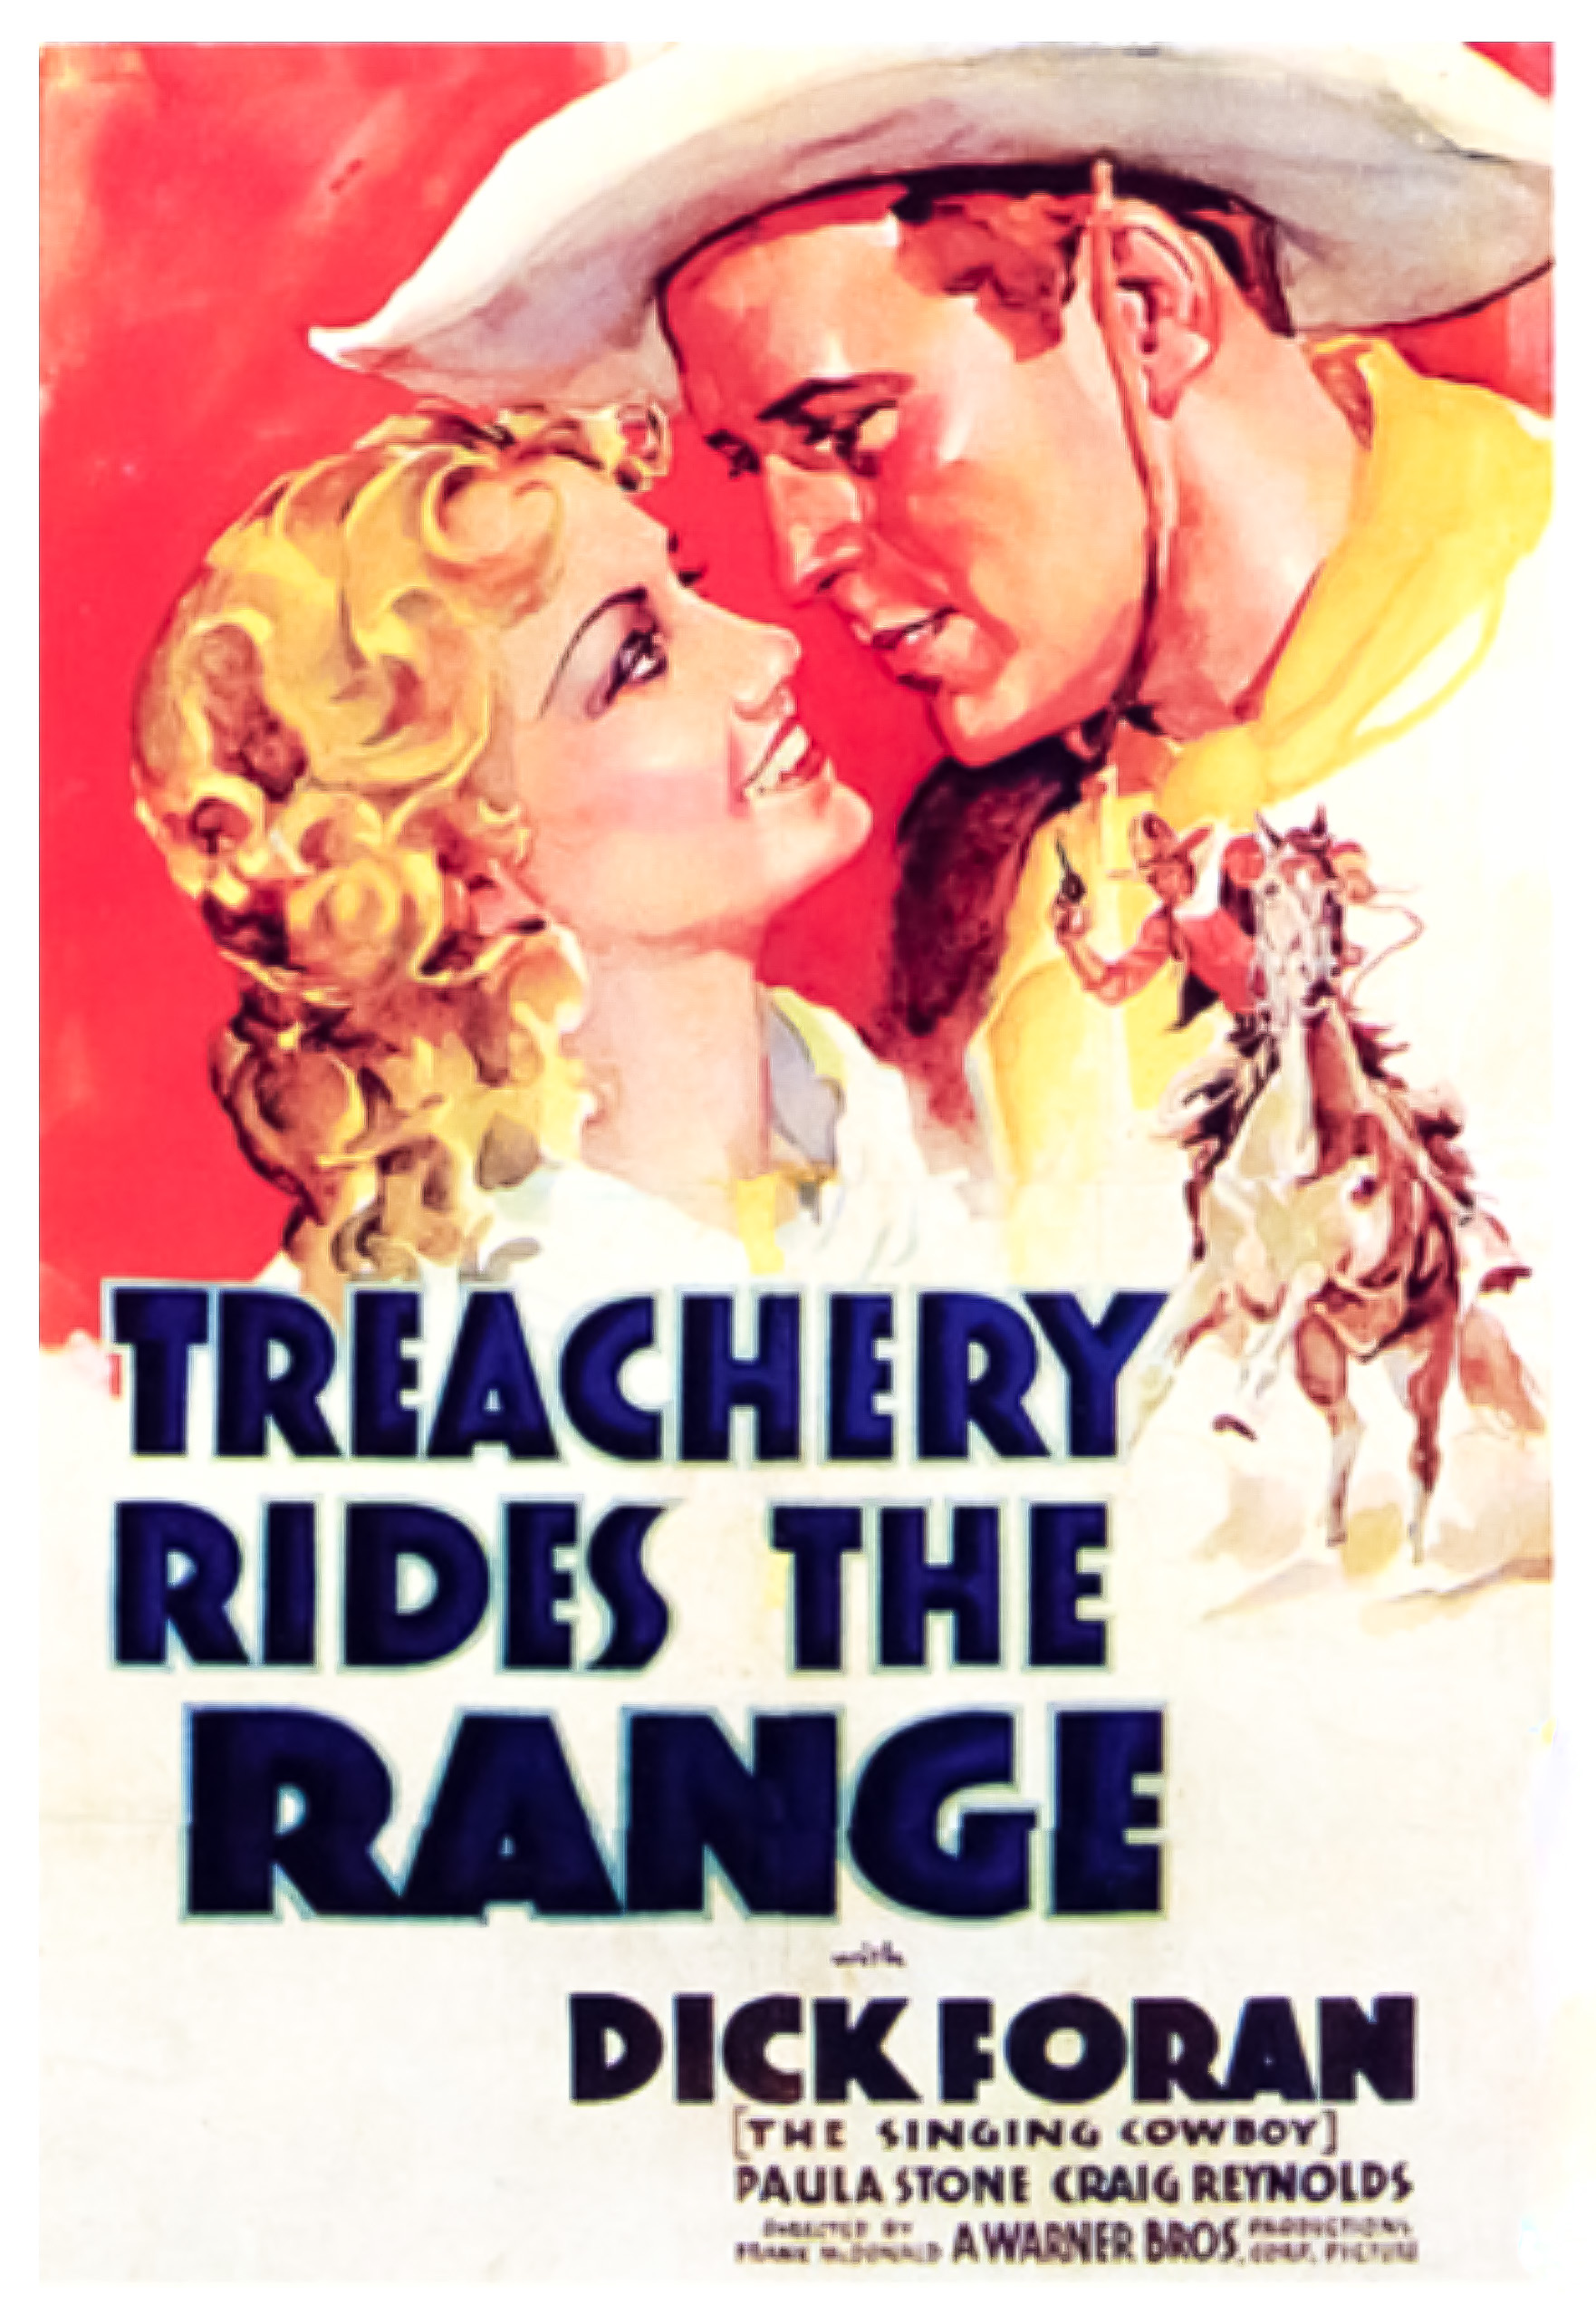 Treachery Rides the Range (1936) starring Dick Foran on DVD on DVD